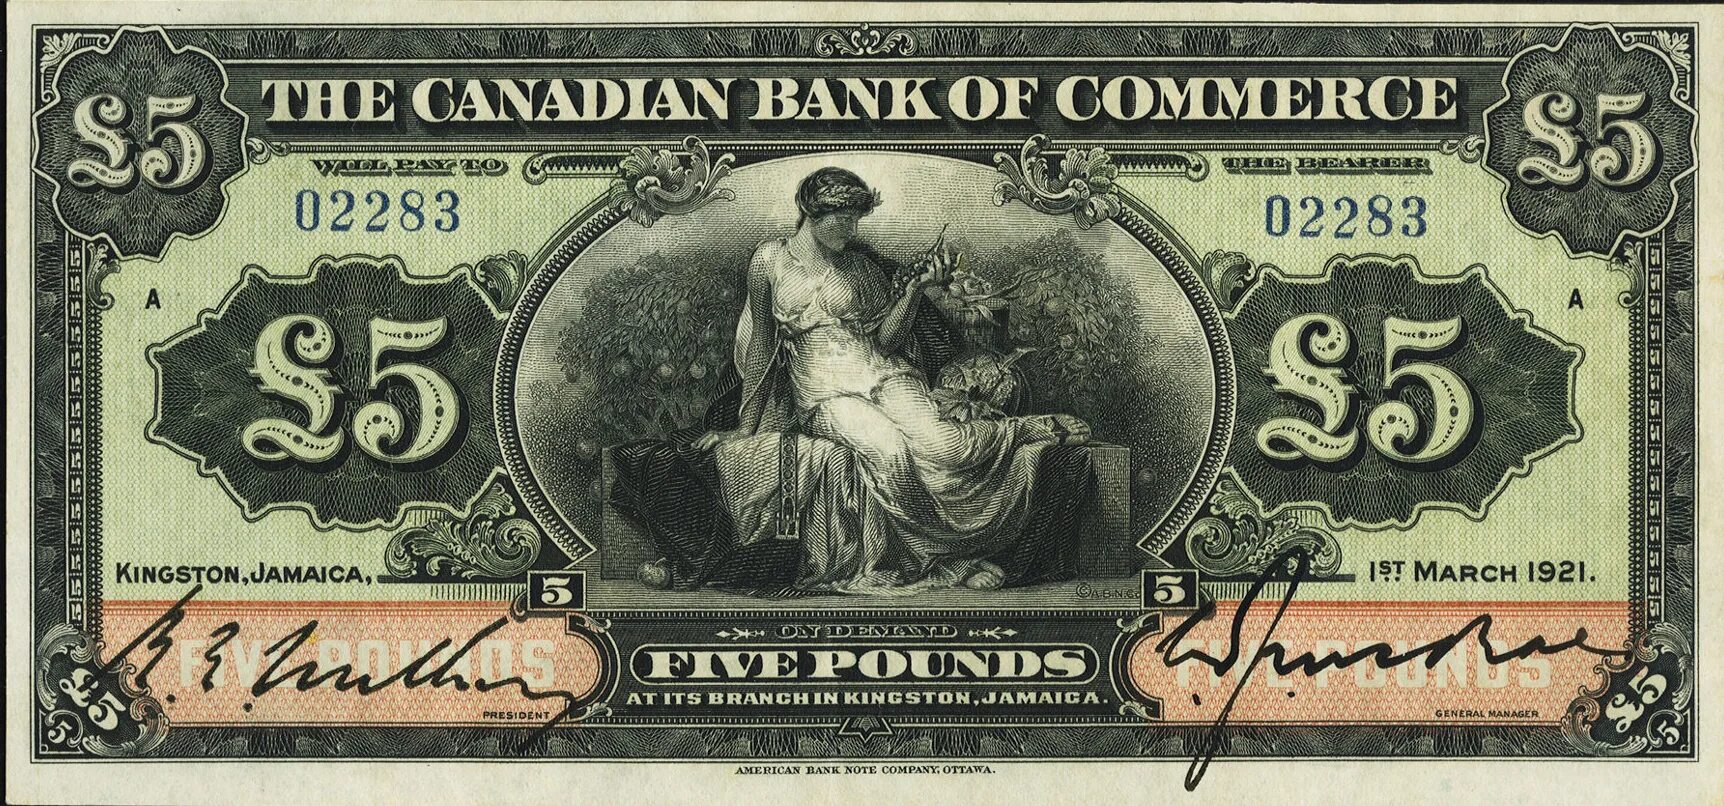 Cash 2 money. Canadian Banks. Банкнота Мальты 5 фунтов. Canadian money Bank Notes. Canadian Imperial Bank of Commerce.